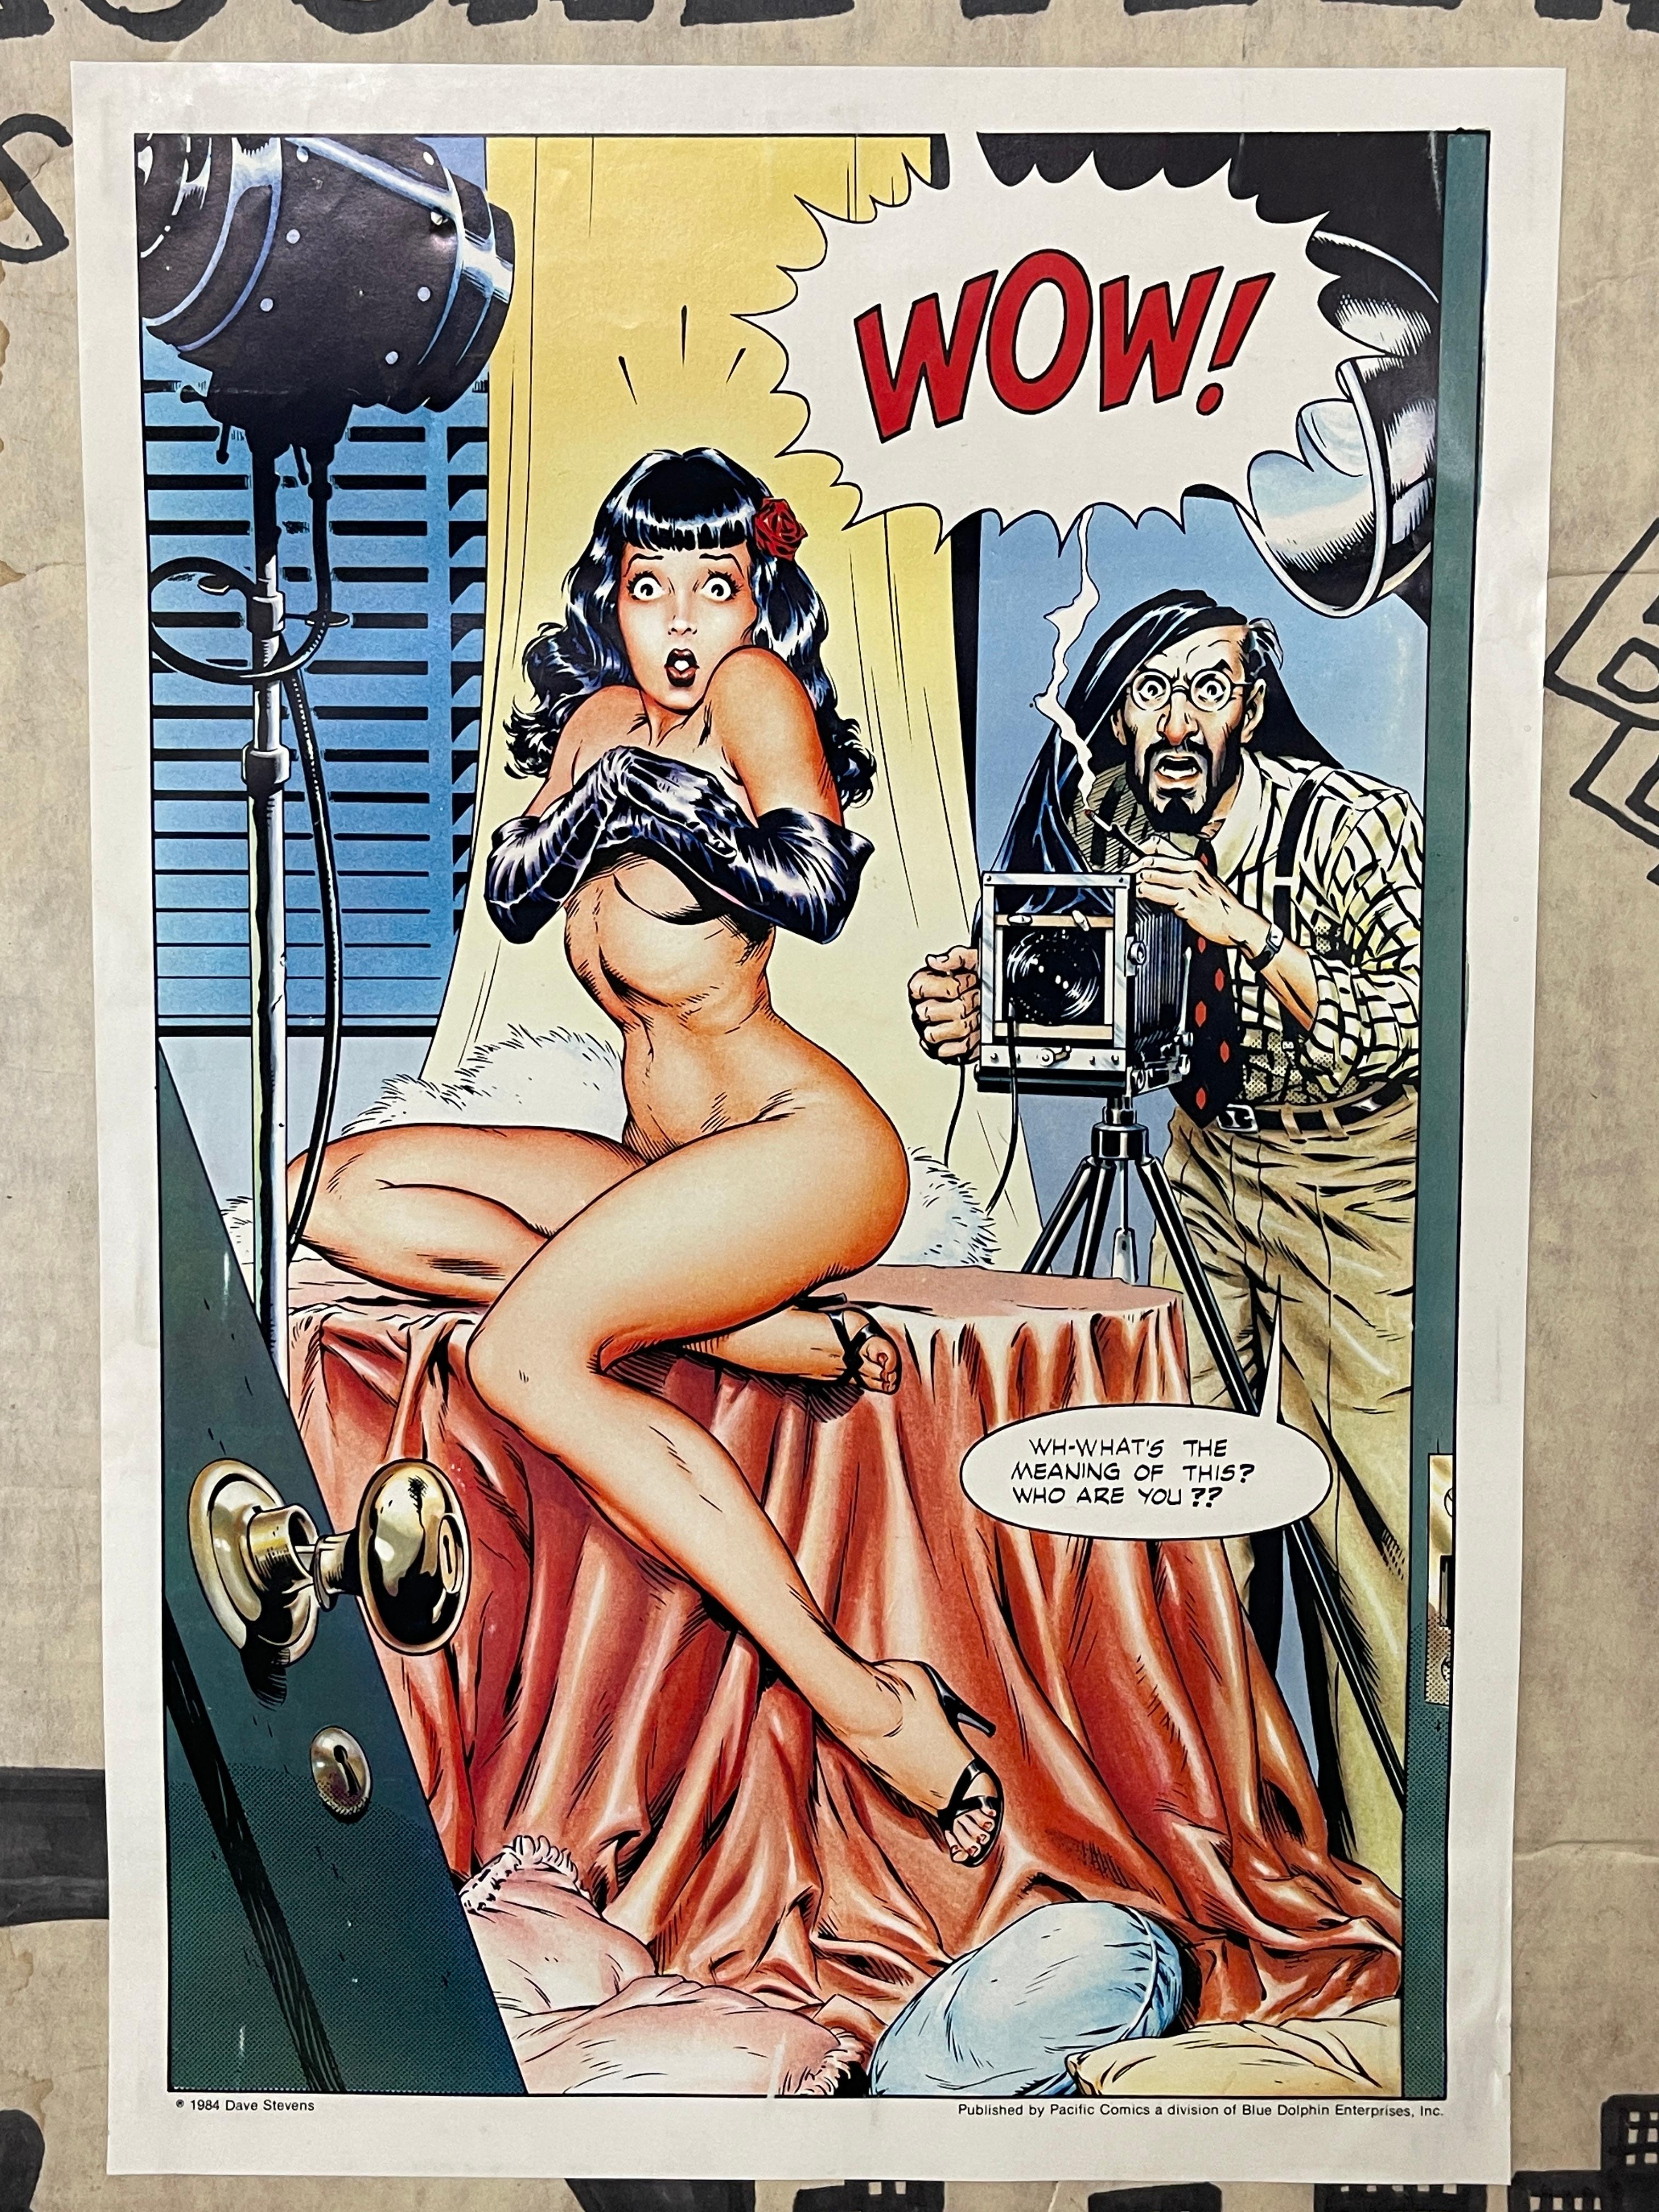 Rocketeer Erotic Storyboard Layout Artwork by Dave Stevens